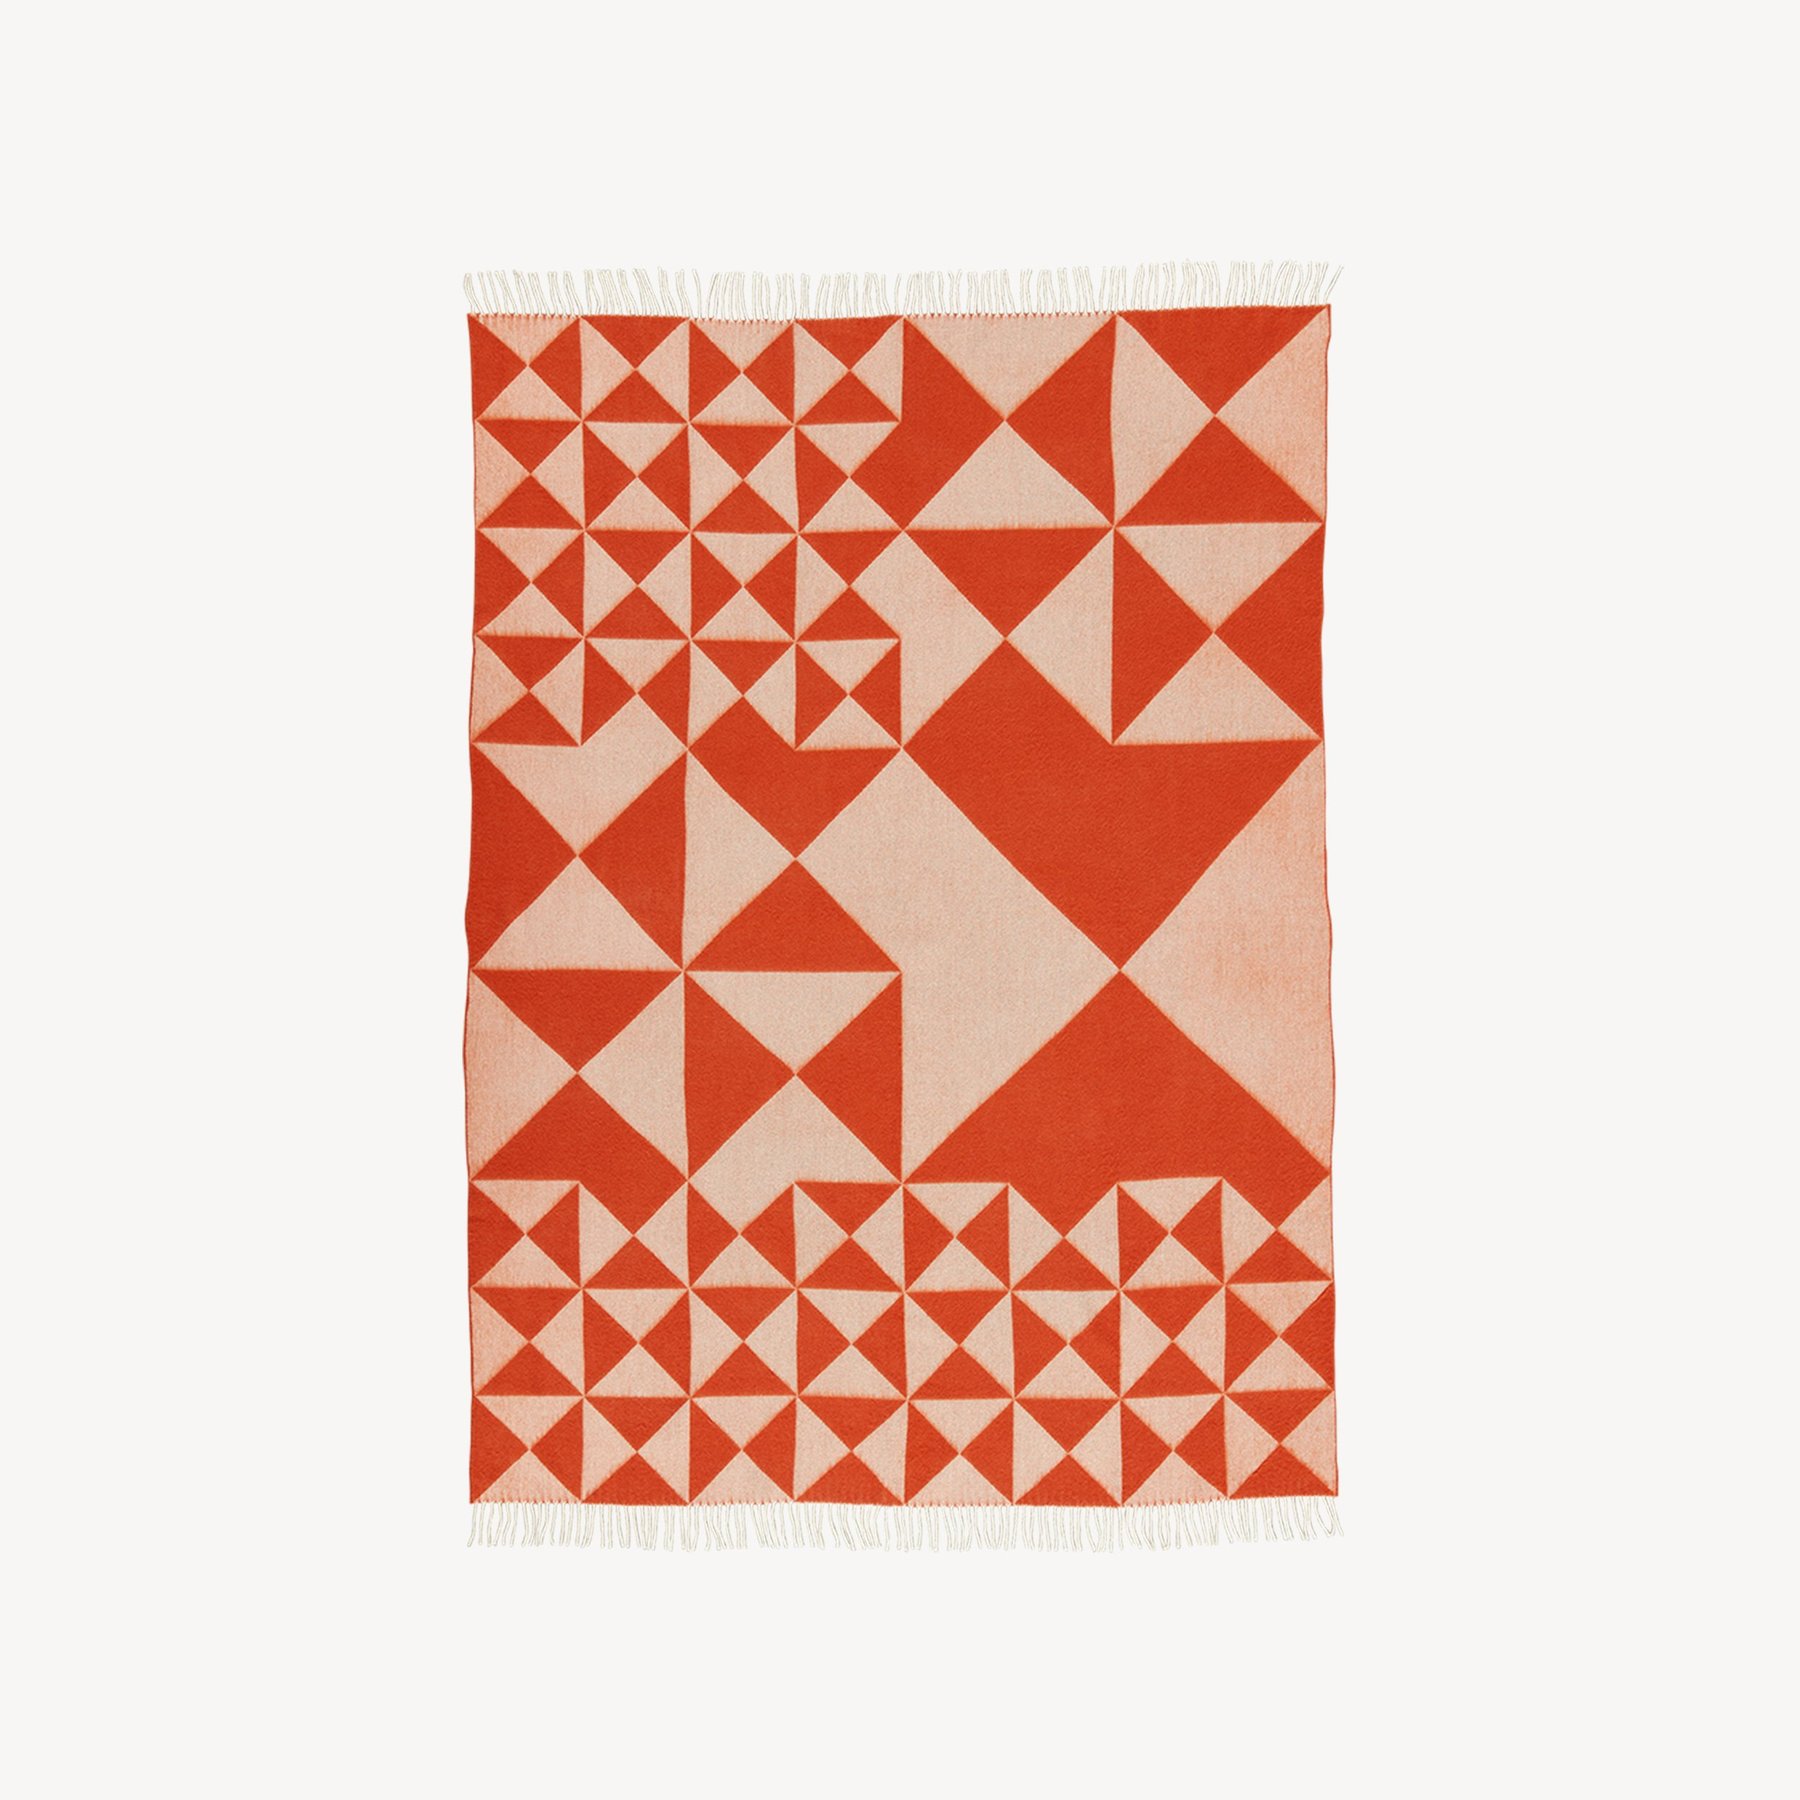 丹麦家具Verpan的MIRROR THROW ORANGE 毯子 主图